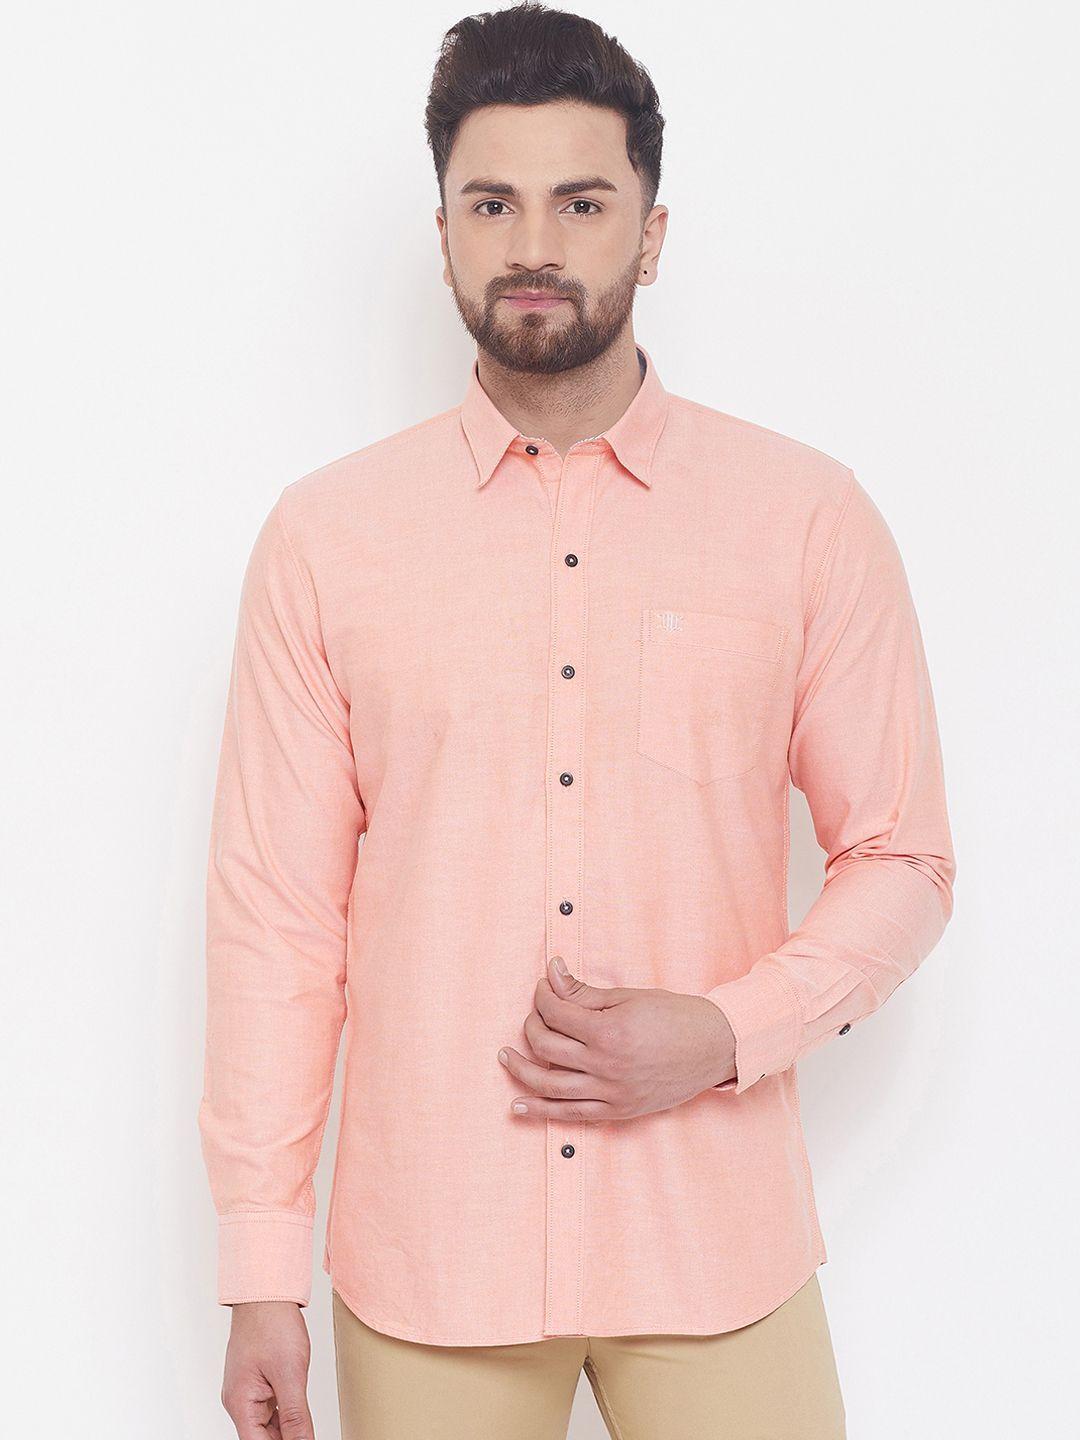 duke-men-peach-coloured-slim-fit-solid-casual-shirt